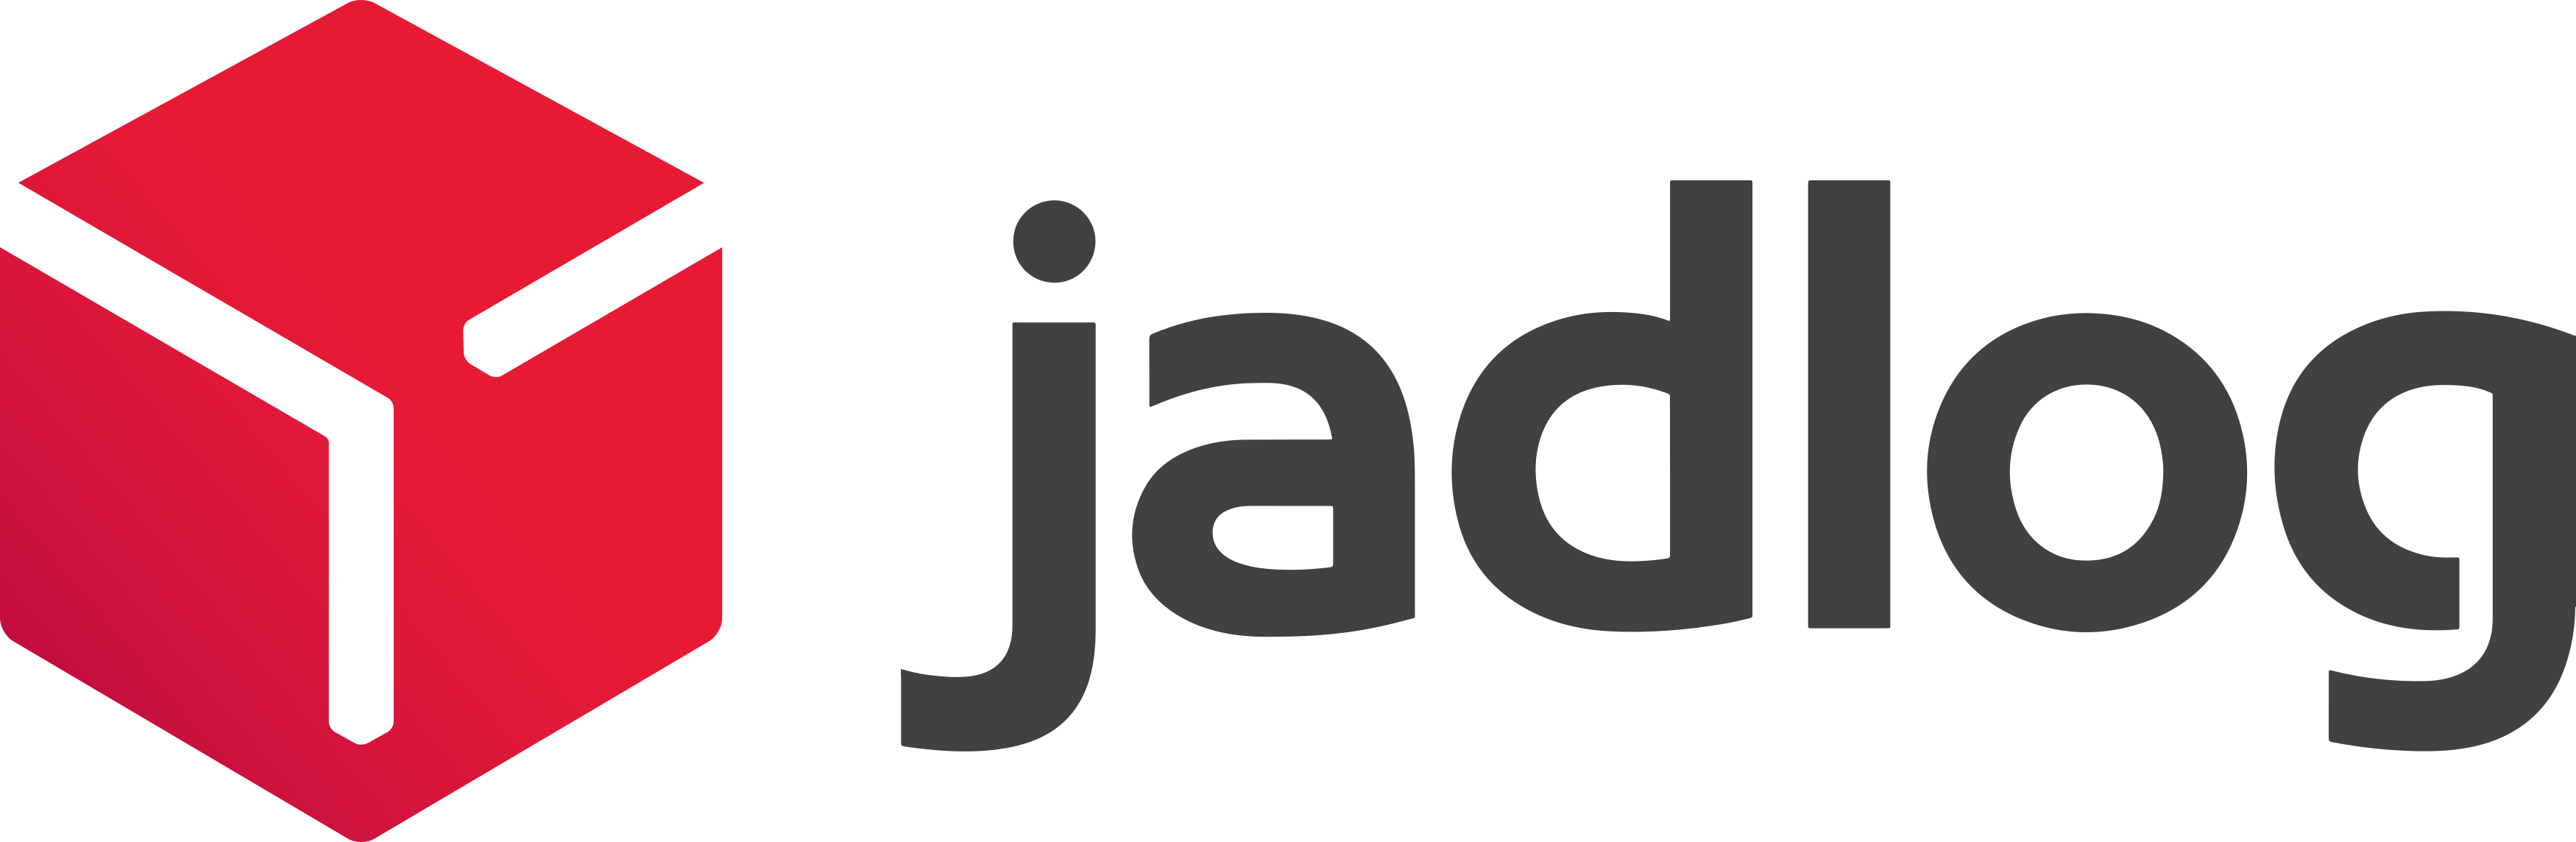 Logo transportadora JadLog